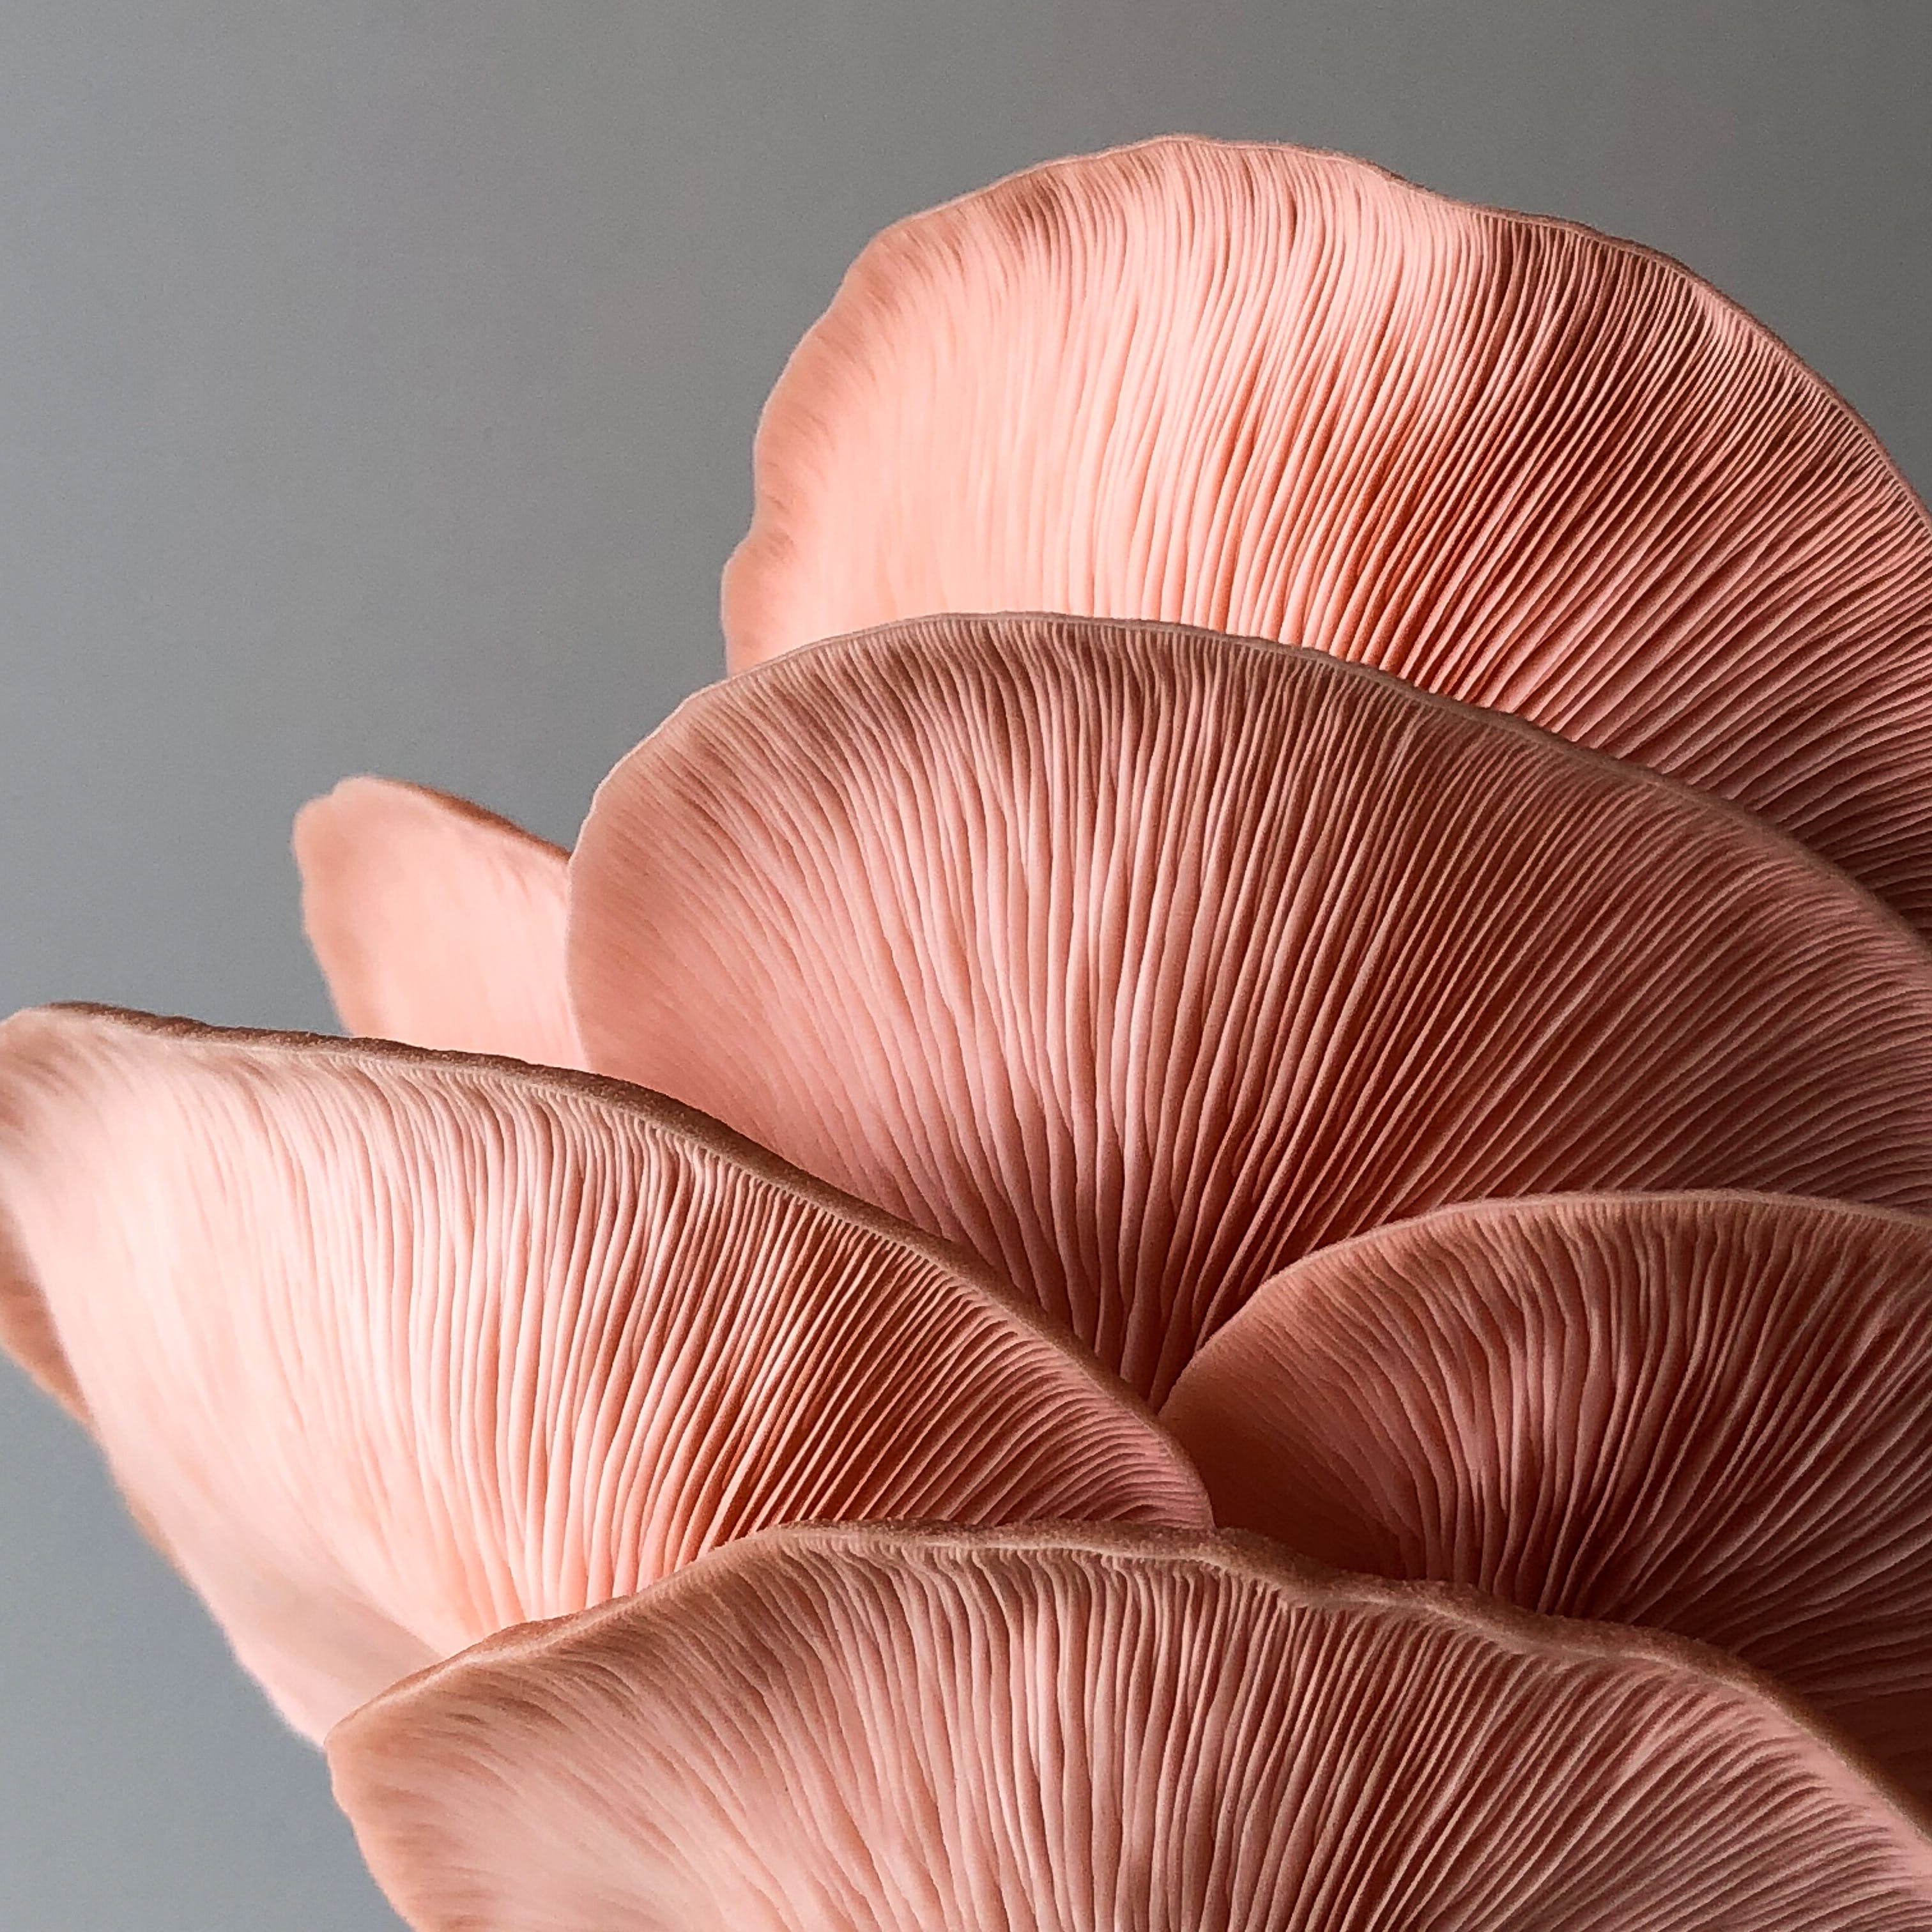 Mushroom Growing Masterclass - Dalby Accommodation